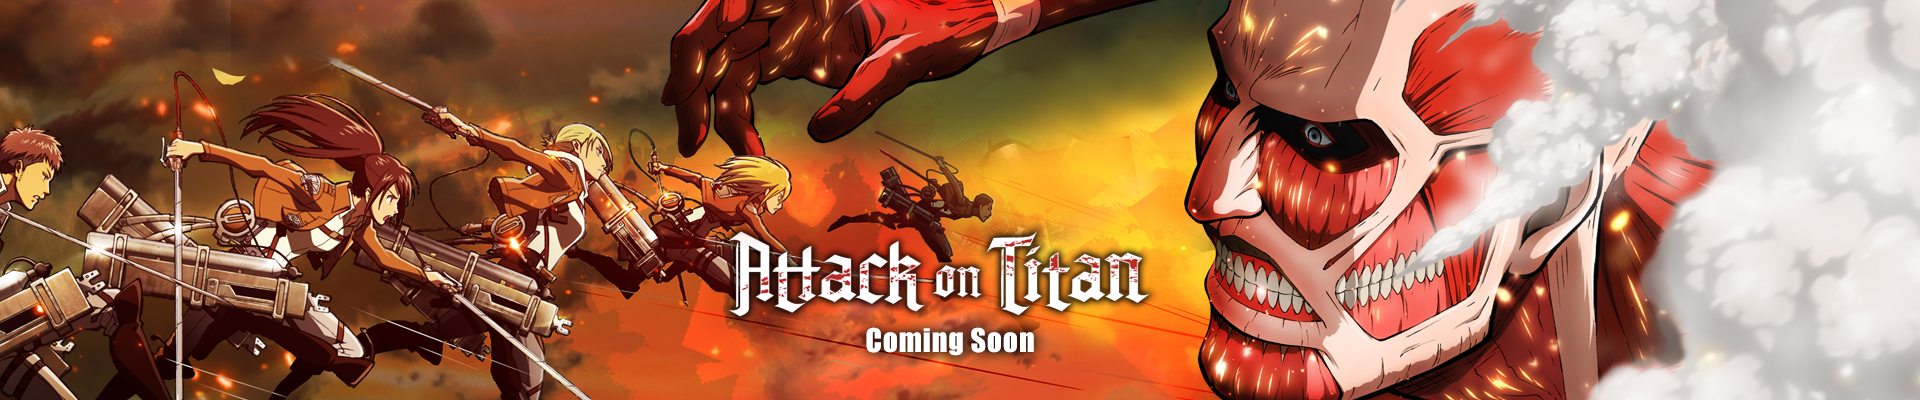 attack on titan tribute game mac